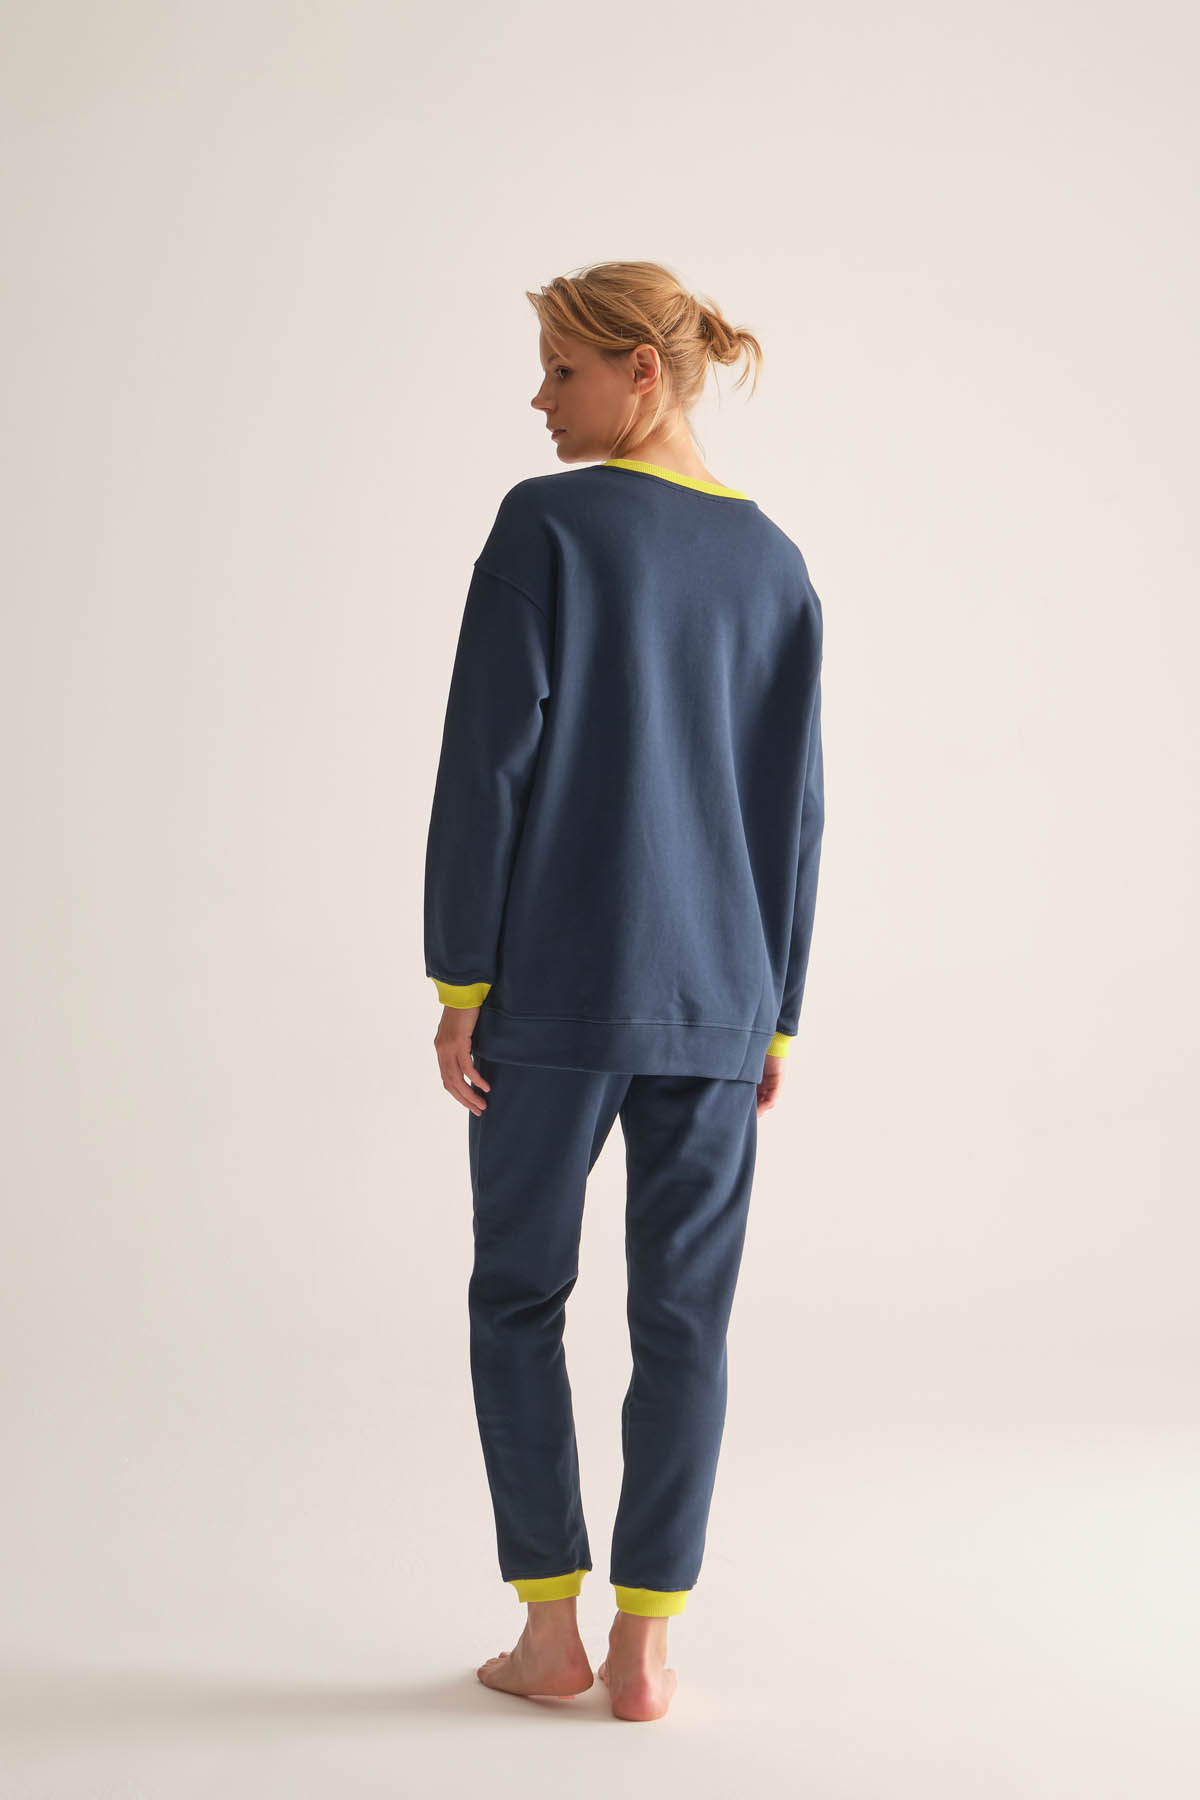 Kadın Pamuklu Üç İplik Kontrast Renk Detaylı Sweatshirt